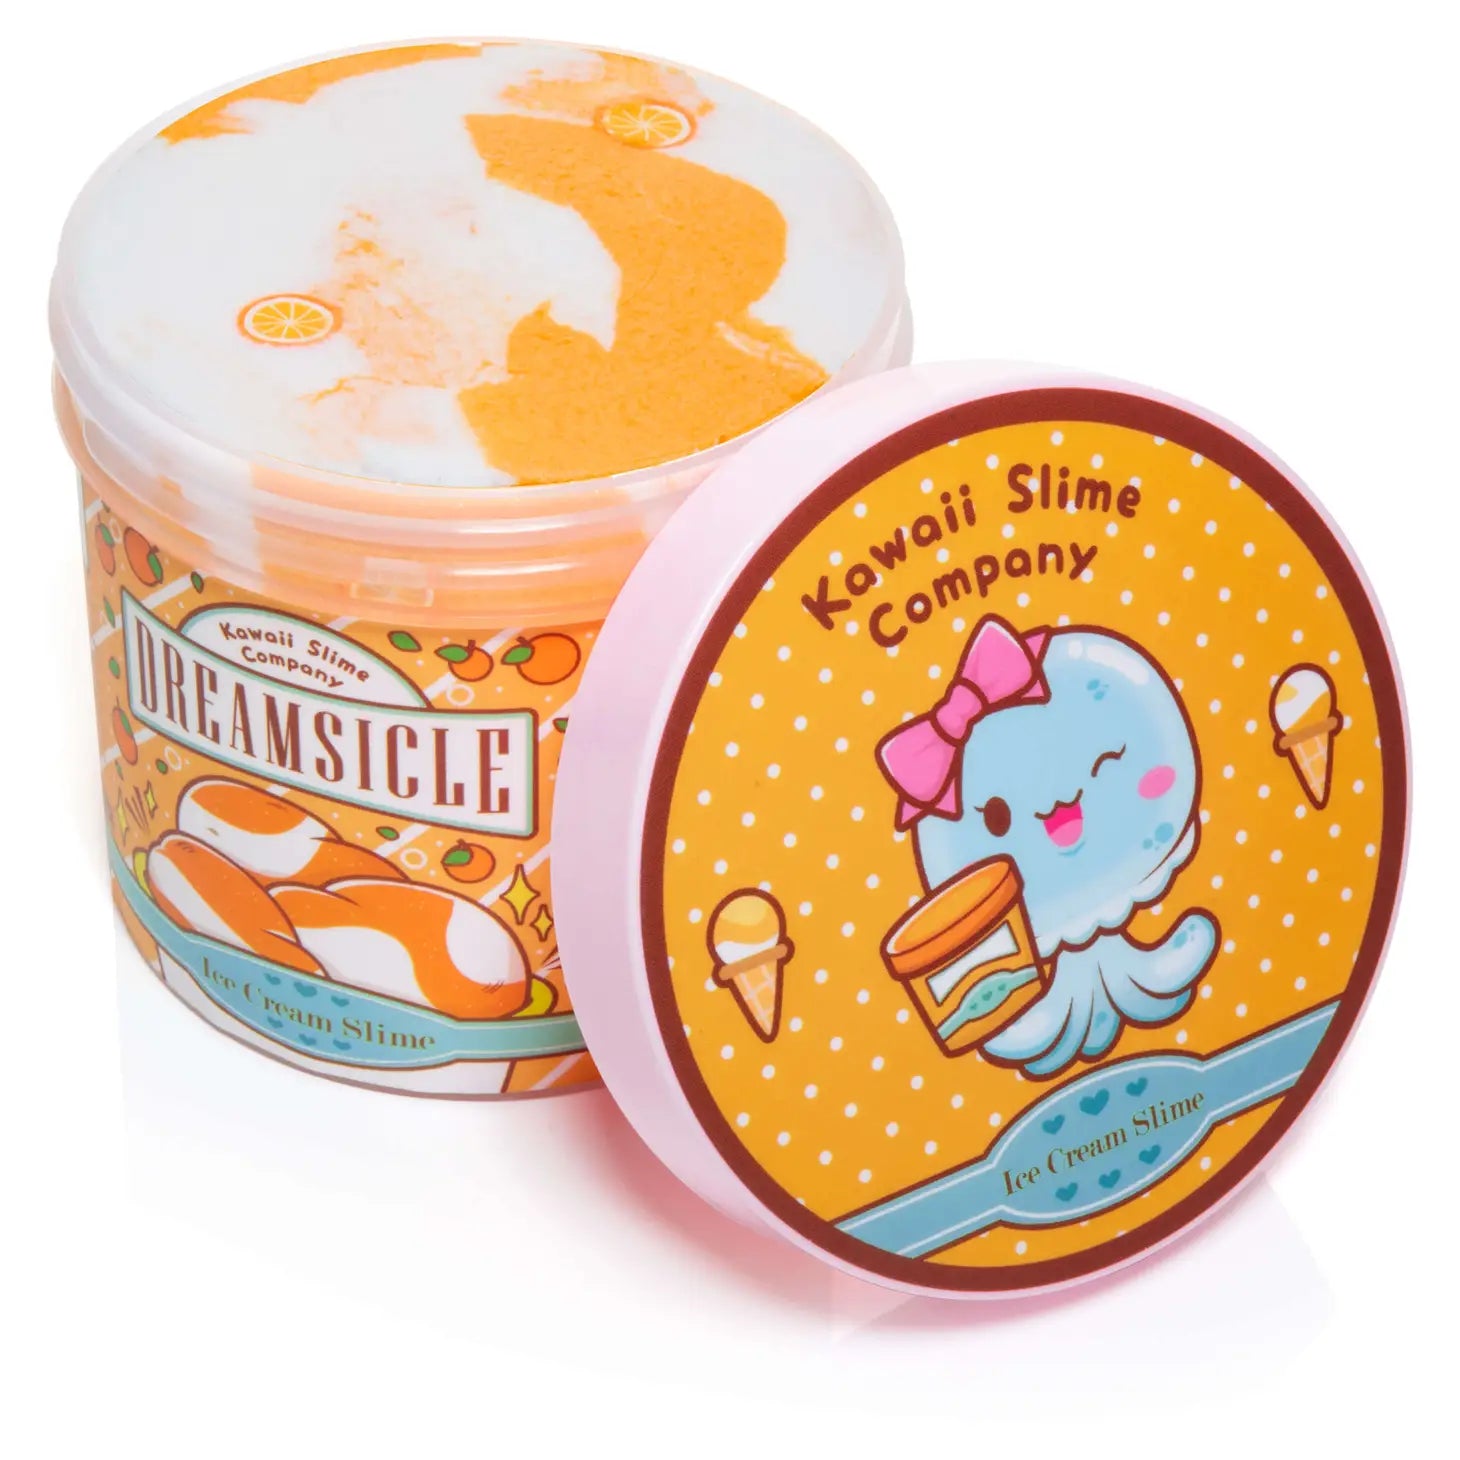 Dreamsicle Ice Cream Slime by Kawaii Slime